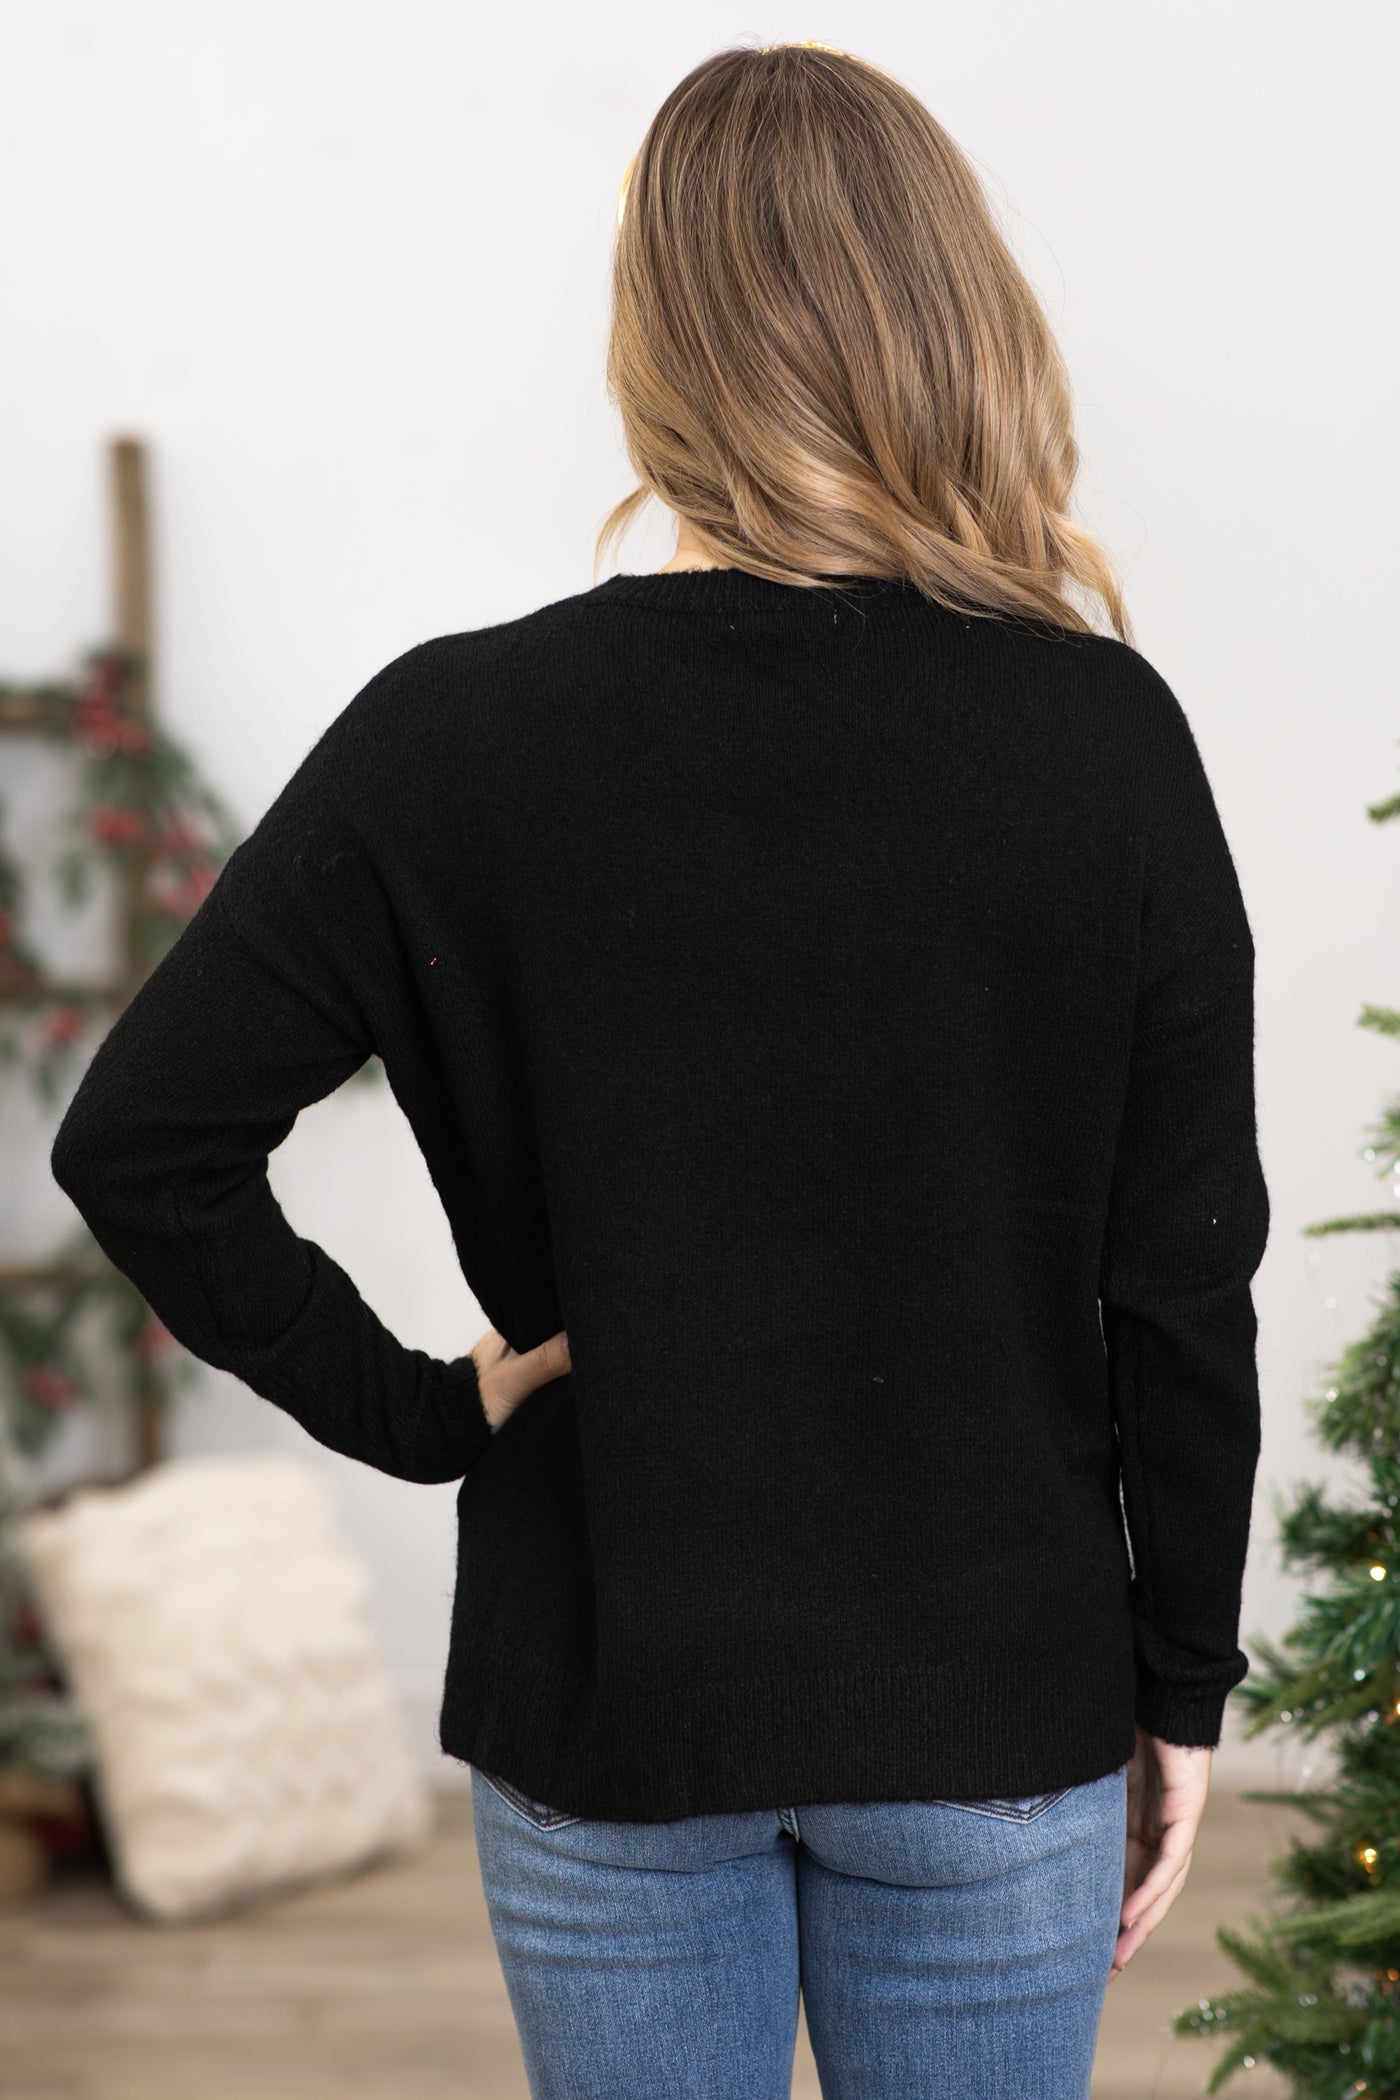 Black Glitter Christmas Tree Sweater